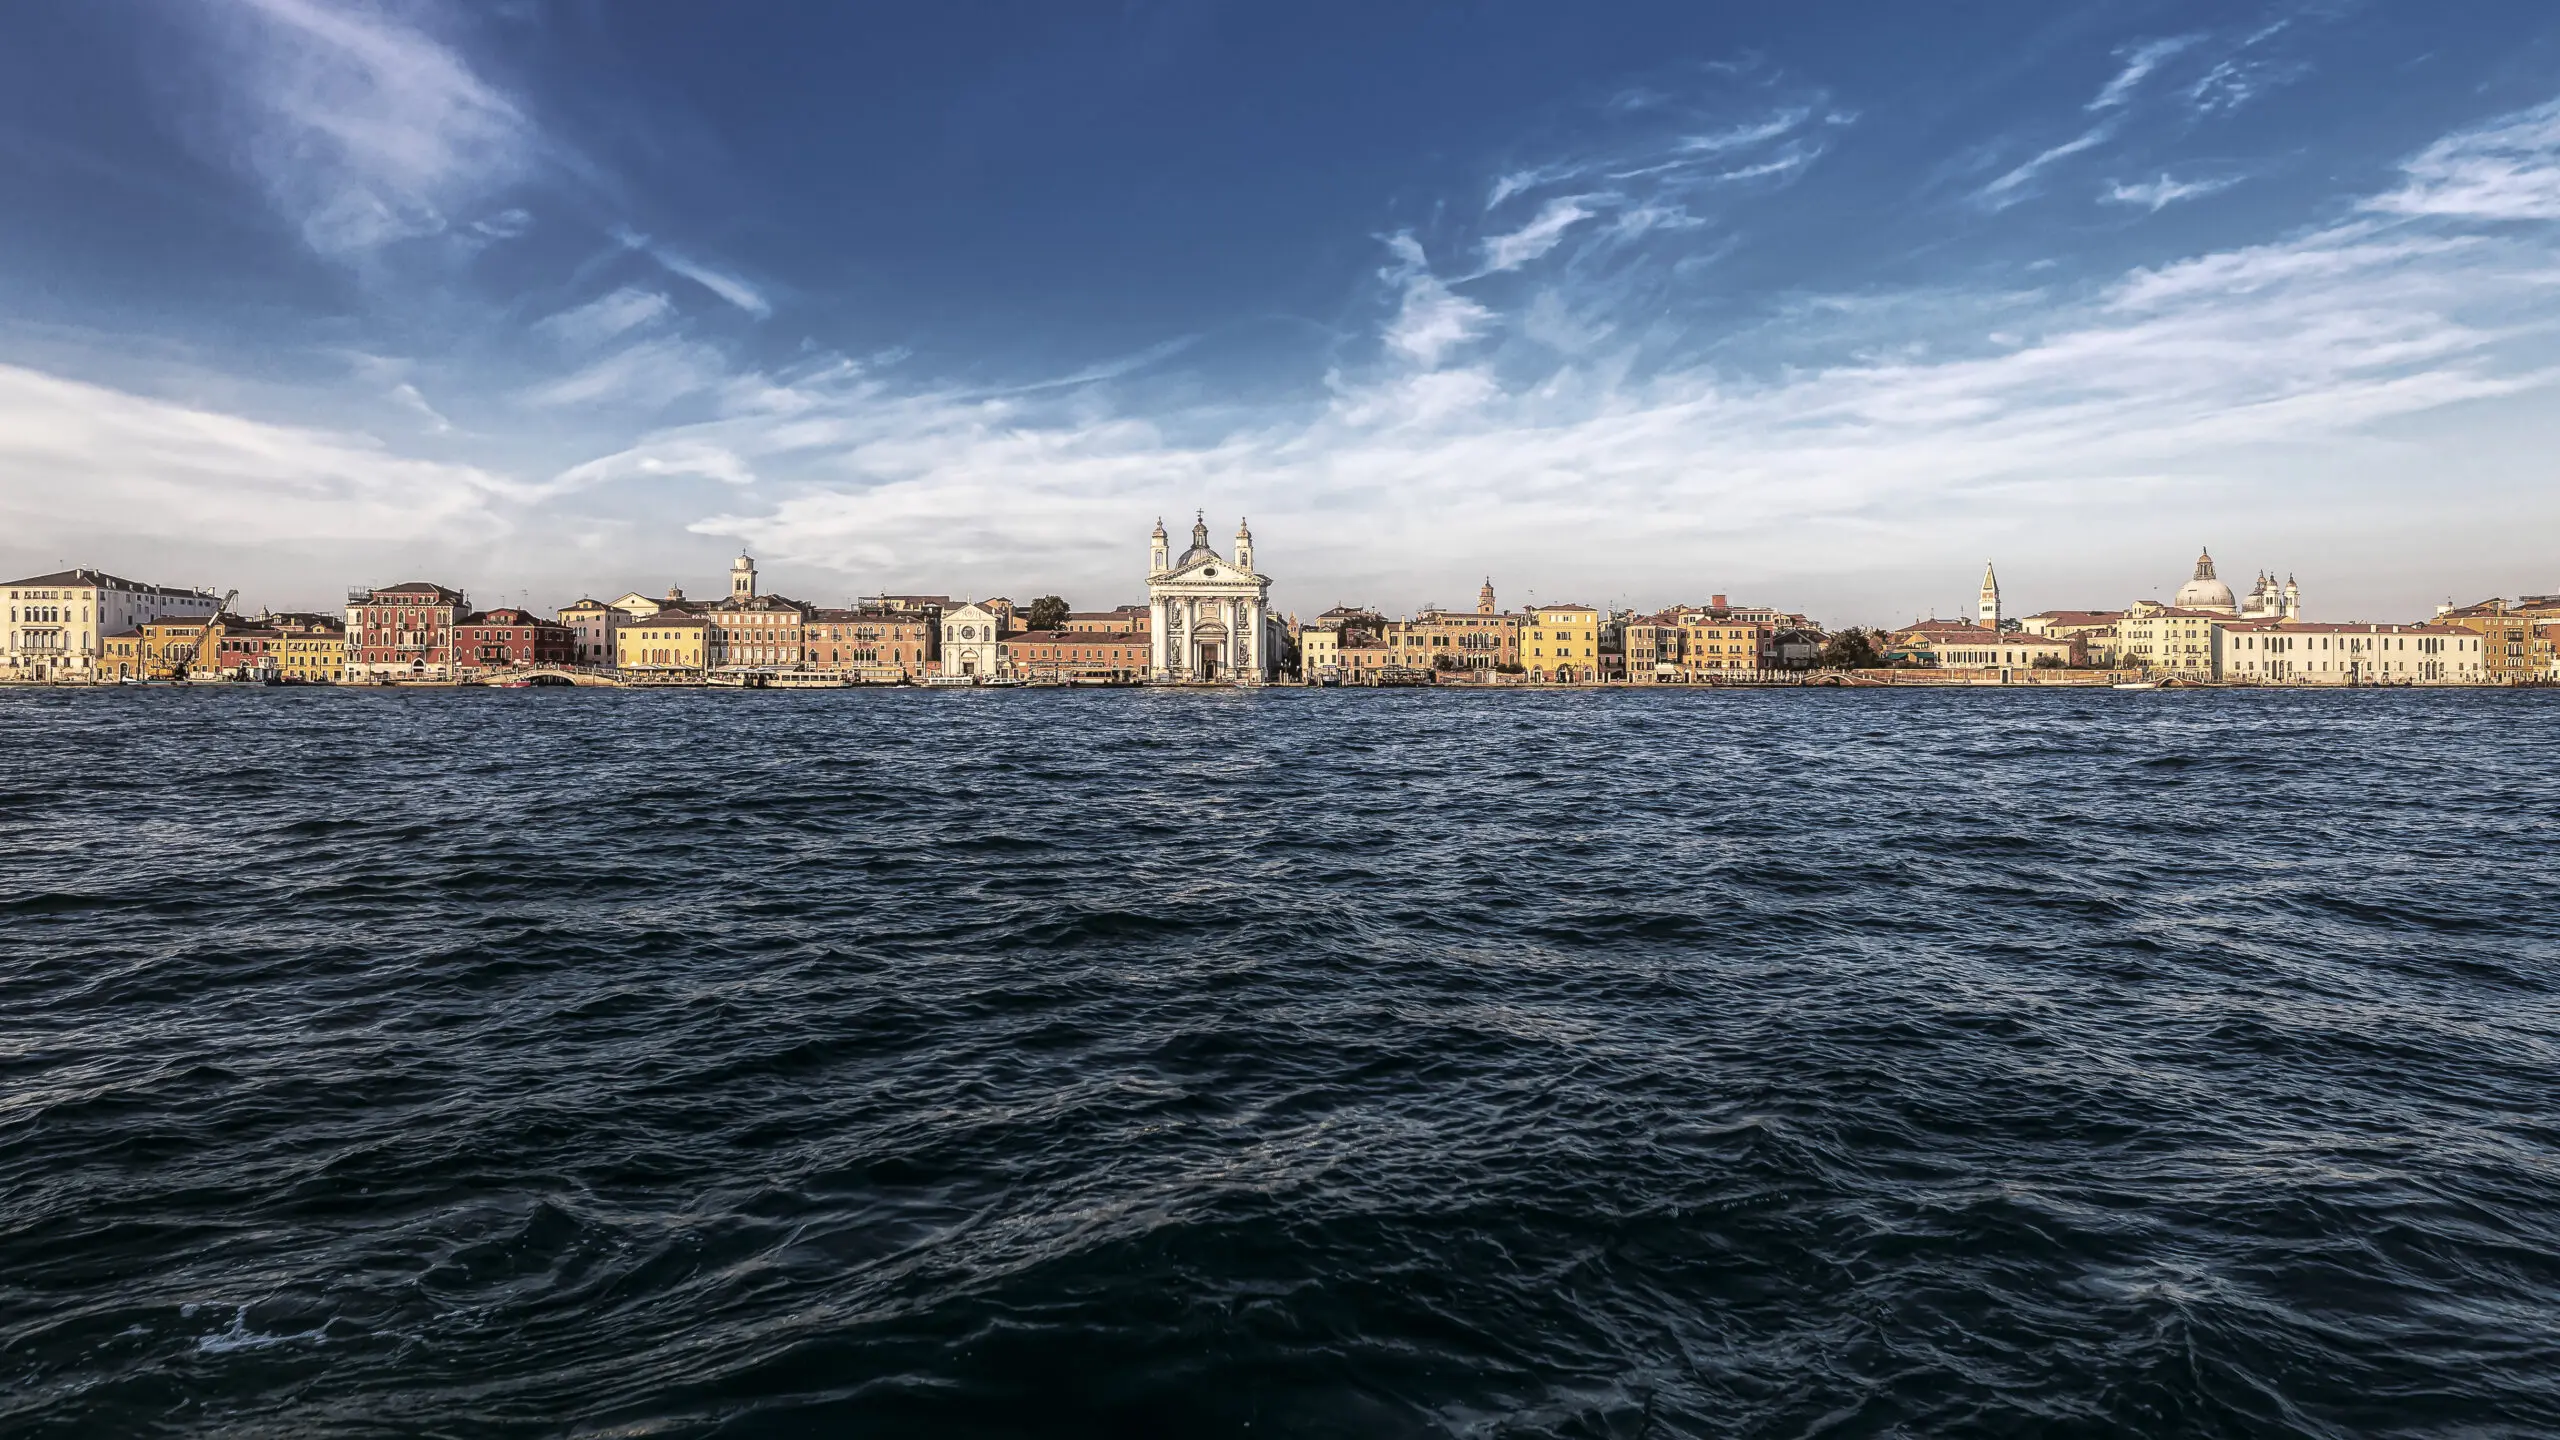 Wandbild (5970) Venice Vaporetto View I präsentiert: Wasser,Architektur,Häuser,Skylines,Meere